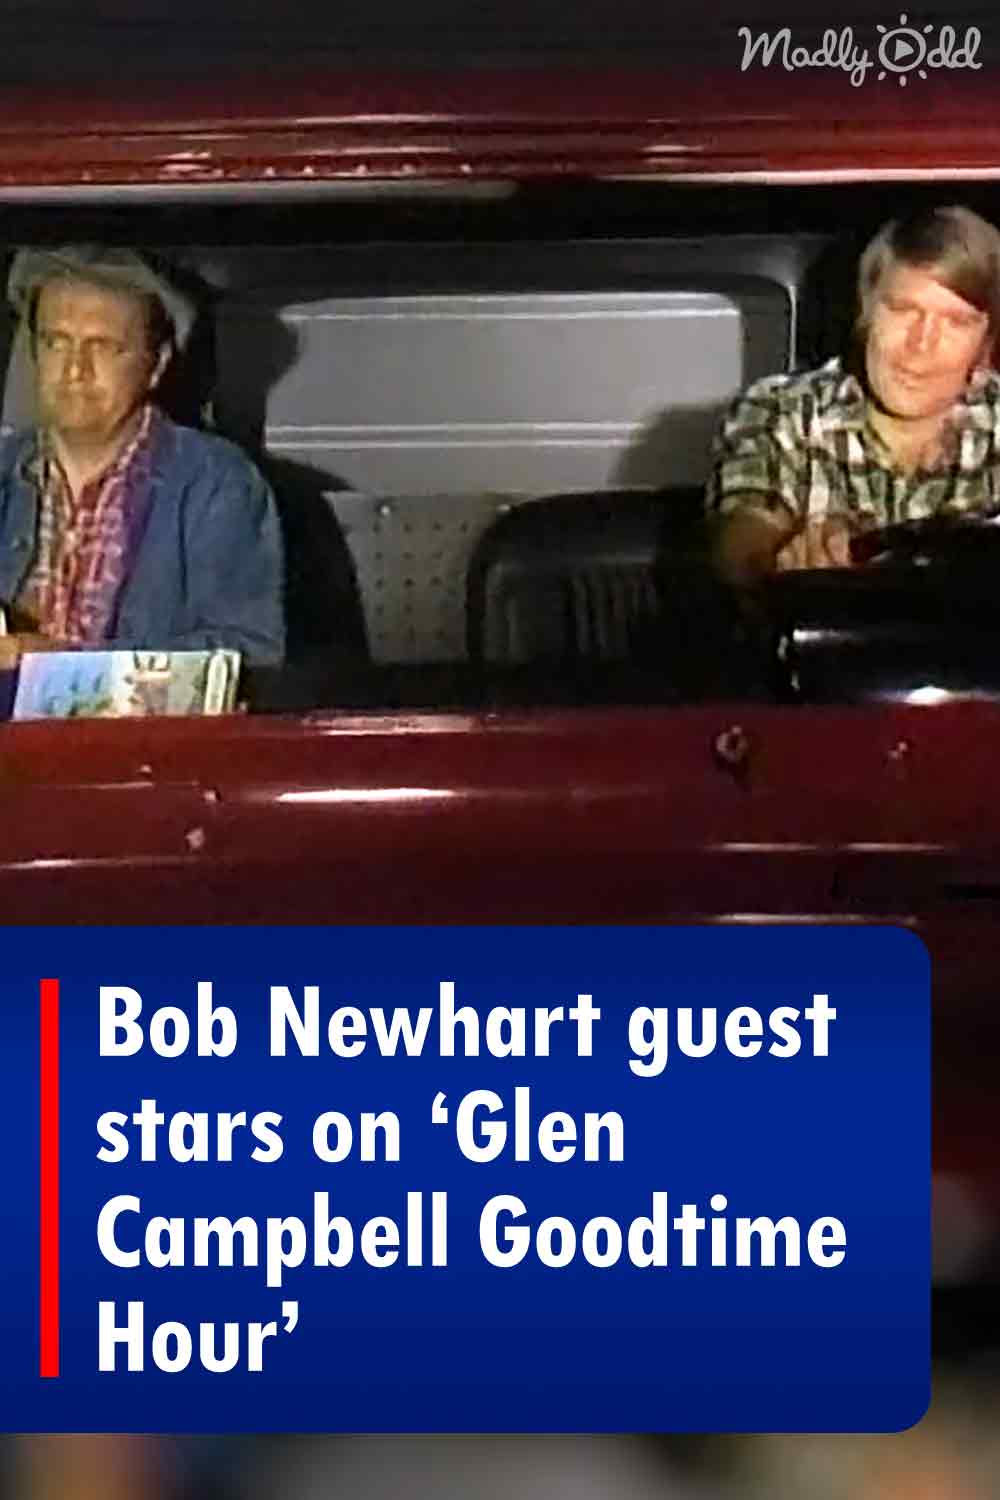 Bob Newhart guest stars on ‘Glen Campbell Goodtime Hour’